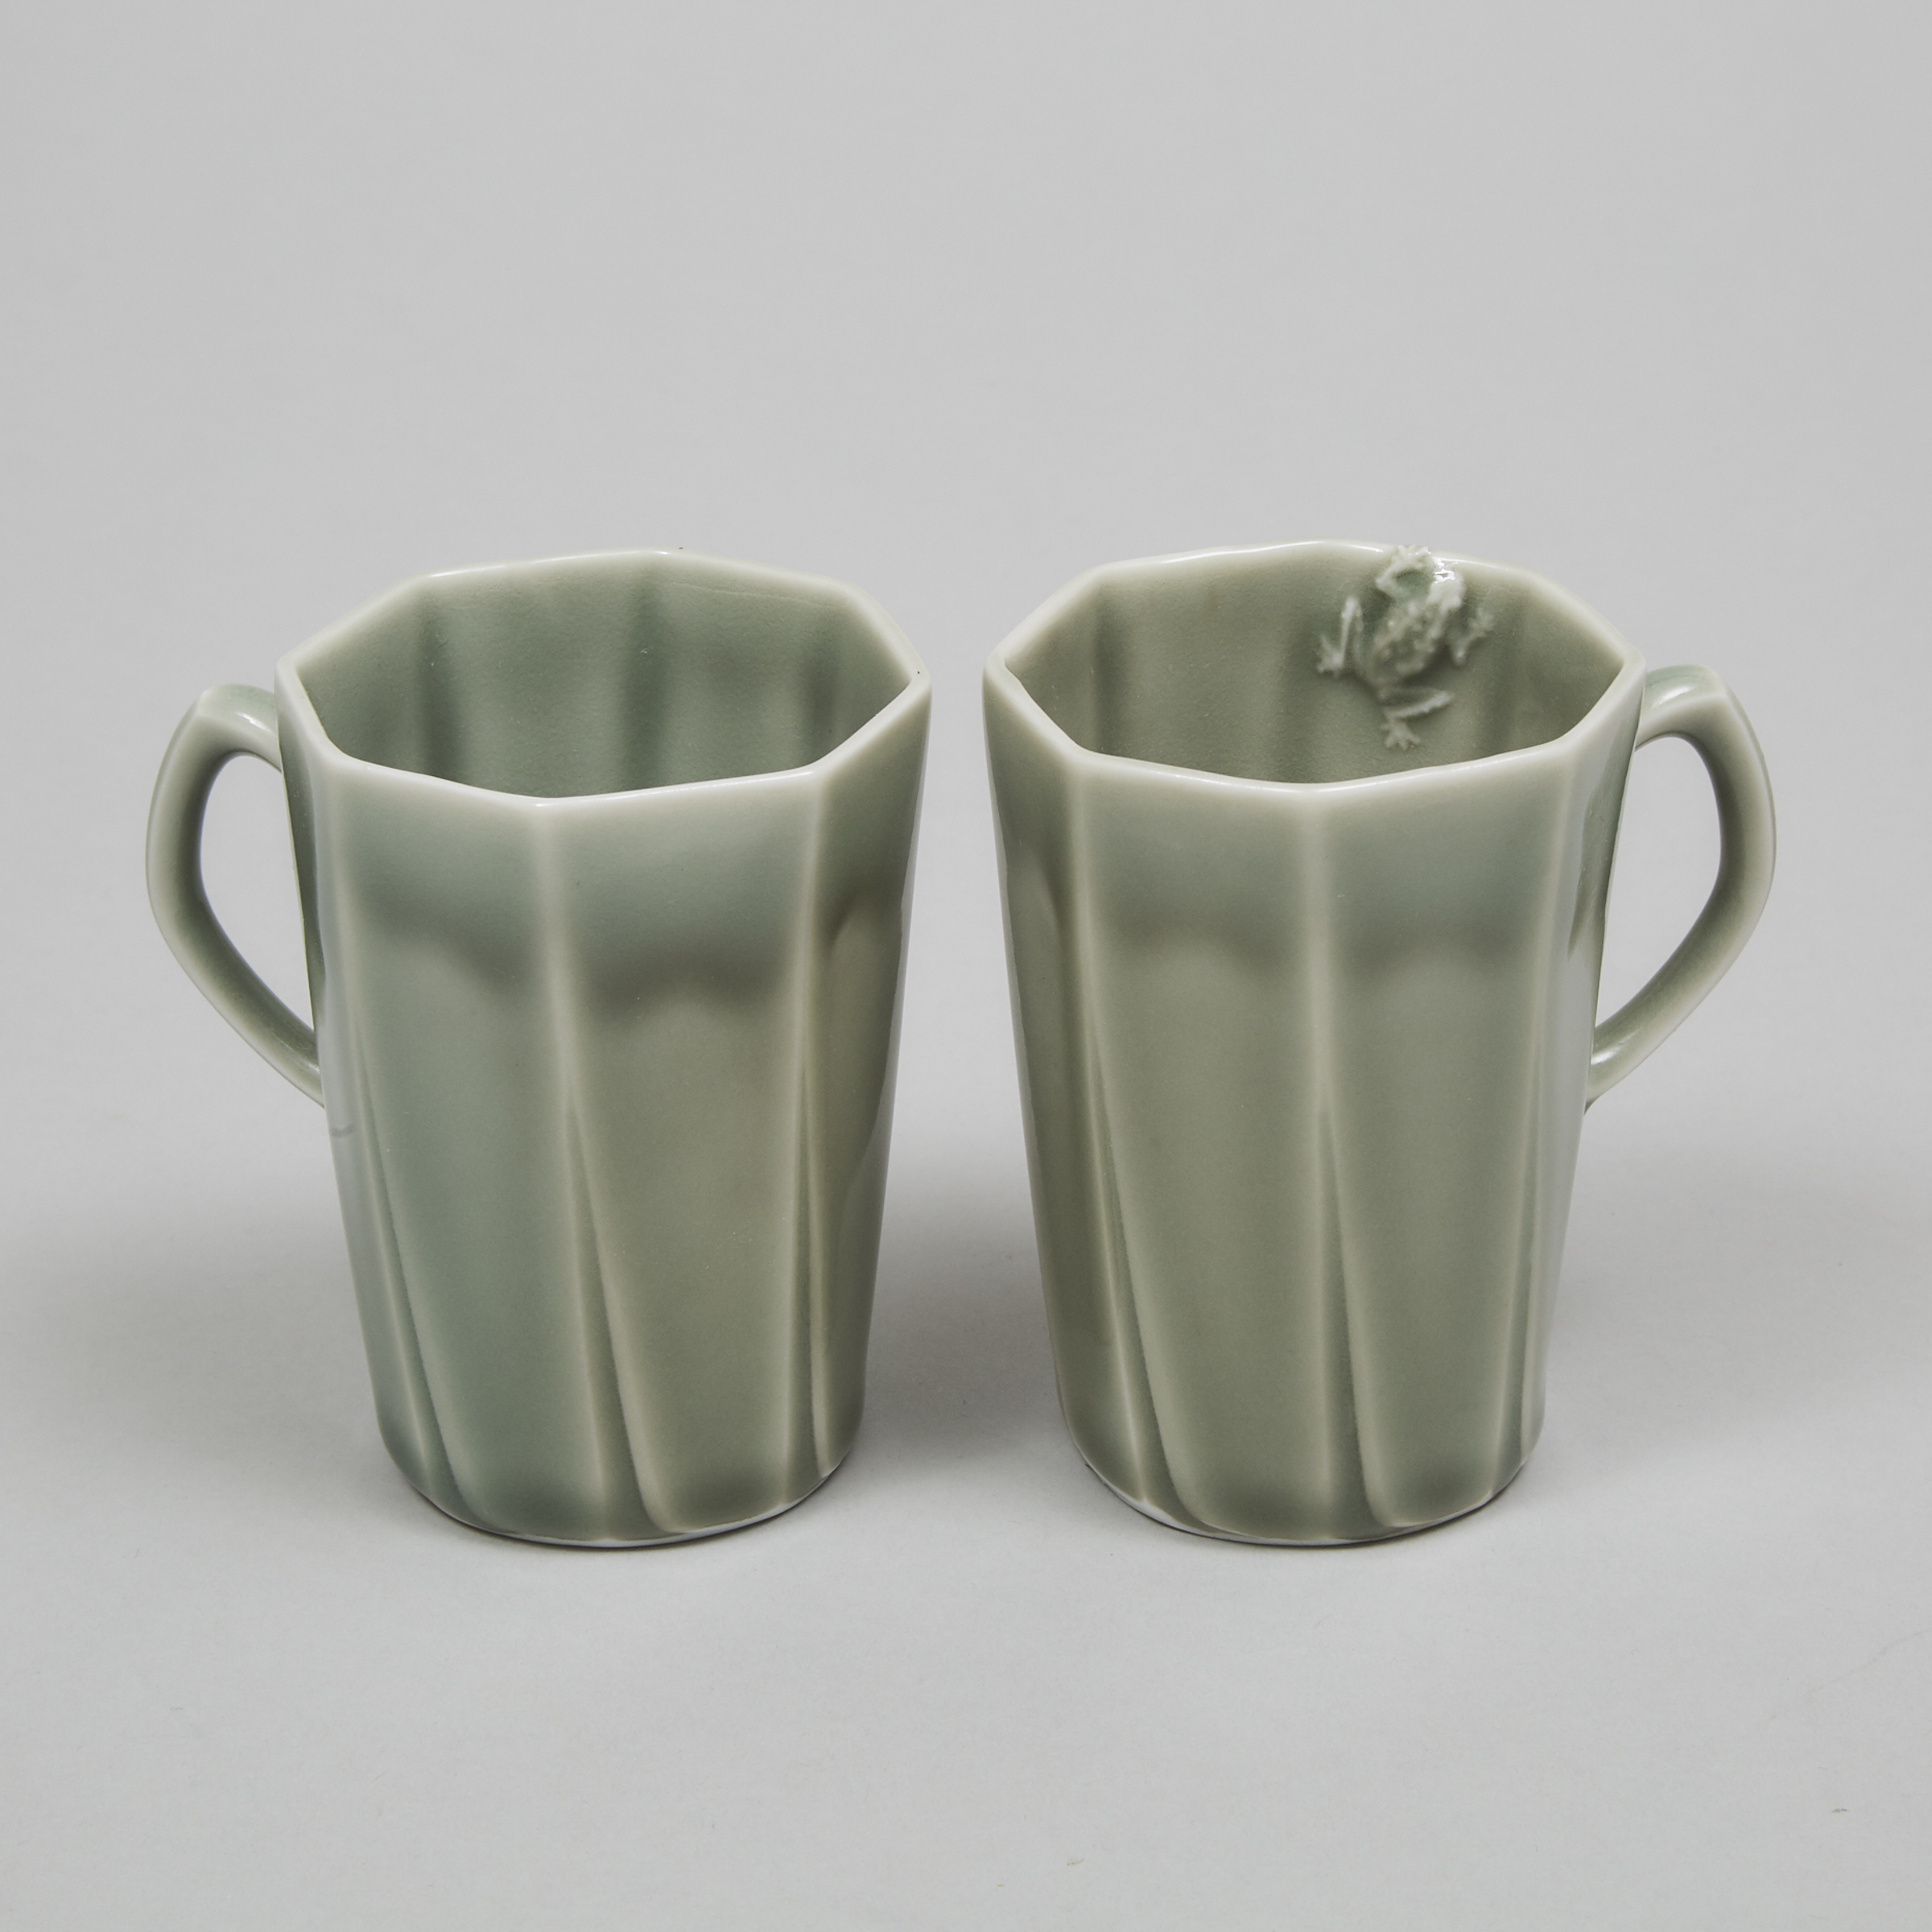 Harlan House (Canadian, b.1943), Two Celadon Glazed Octagonal 'Frog' Mugs, c.2000